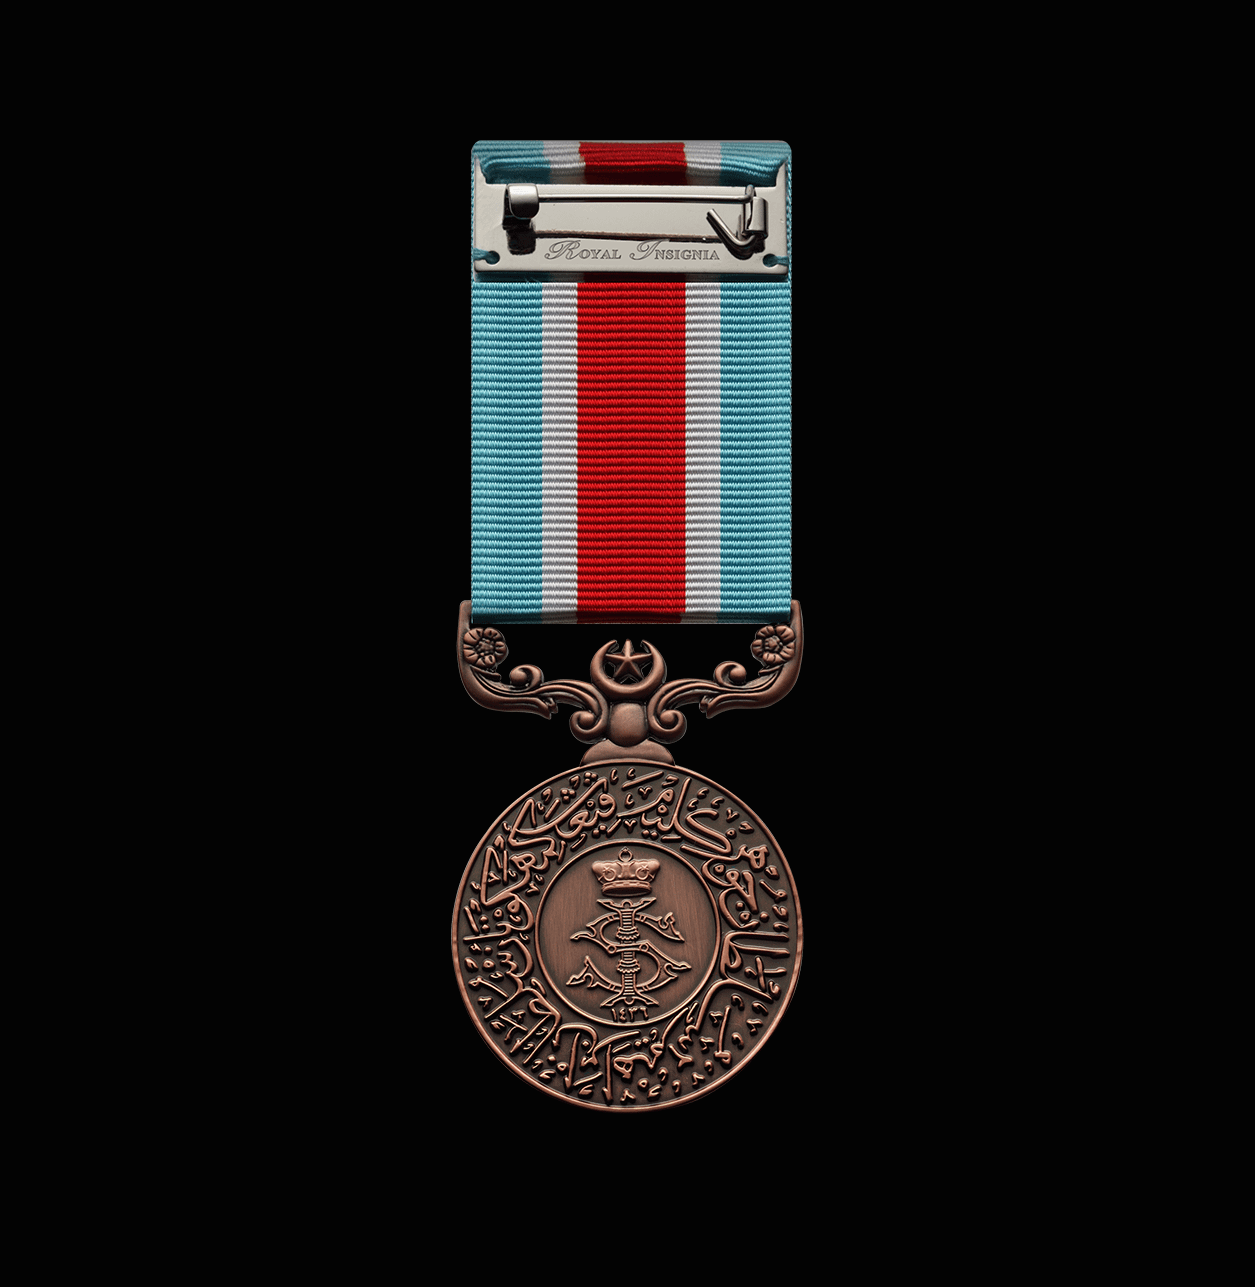 The Coronation of Sultan Ibrahim Johor Medal